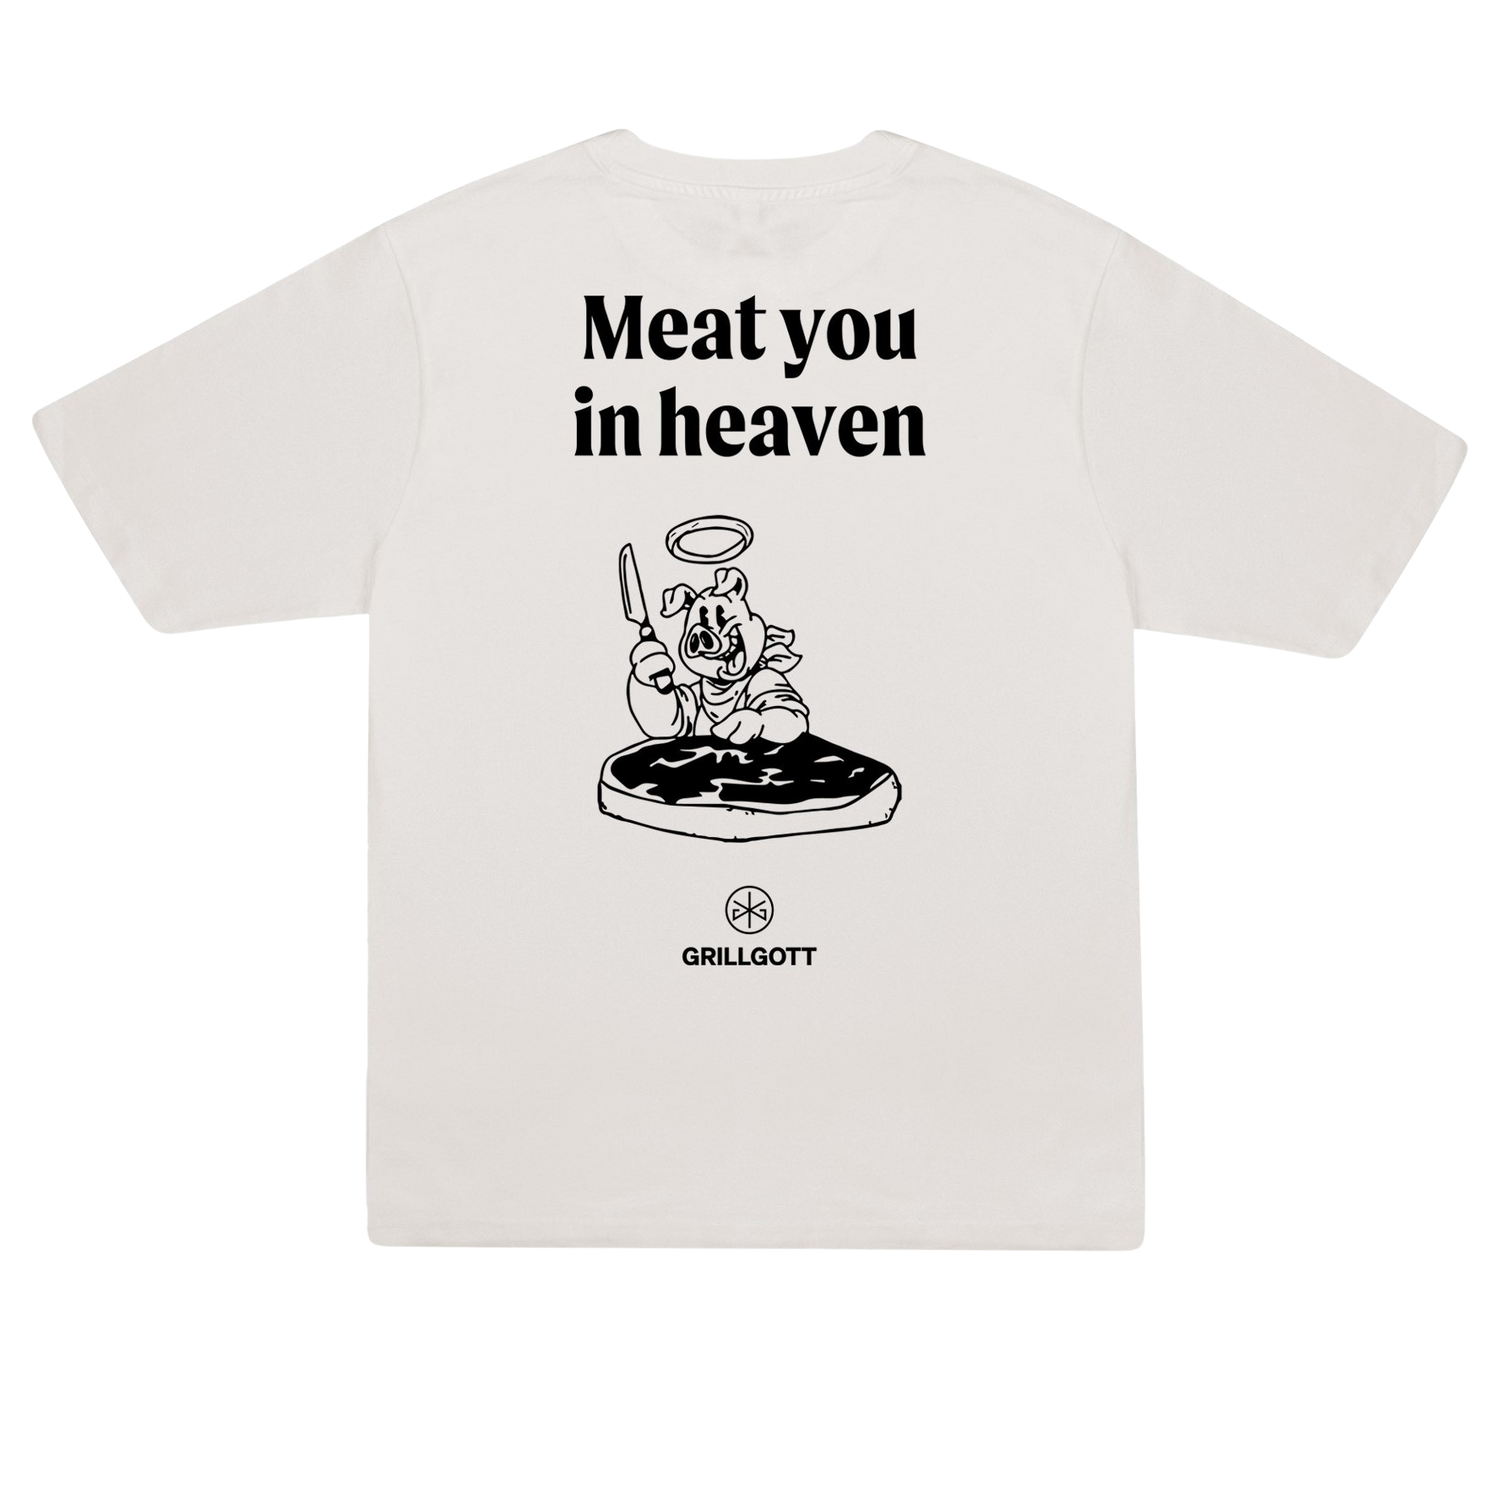 Grillgott T-Shirt S "Meat you in heaven"